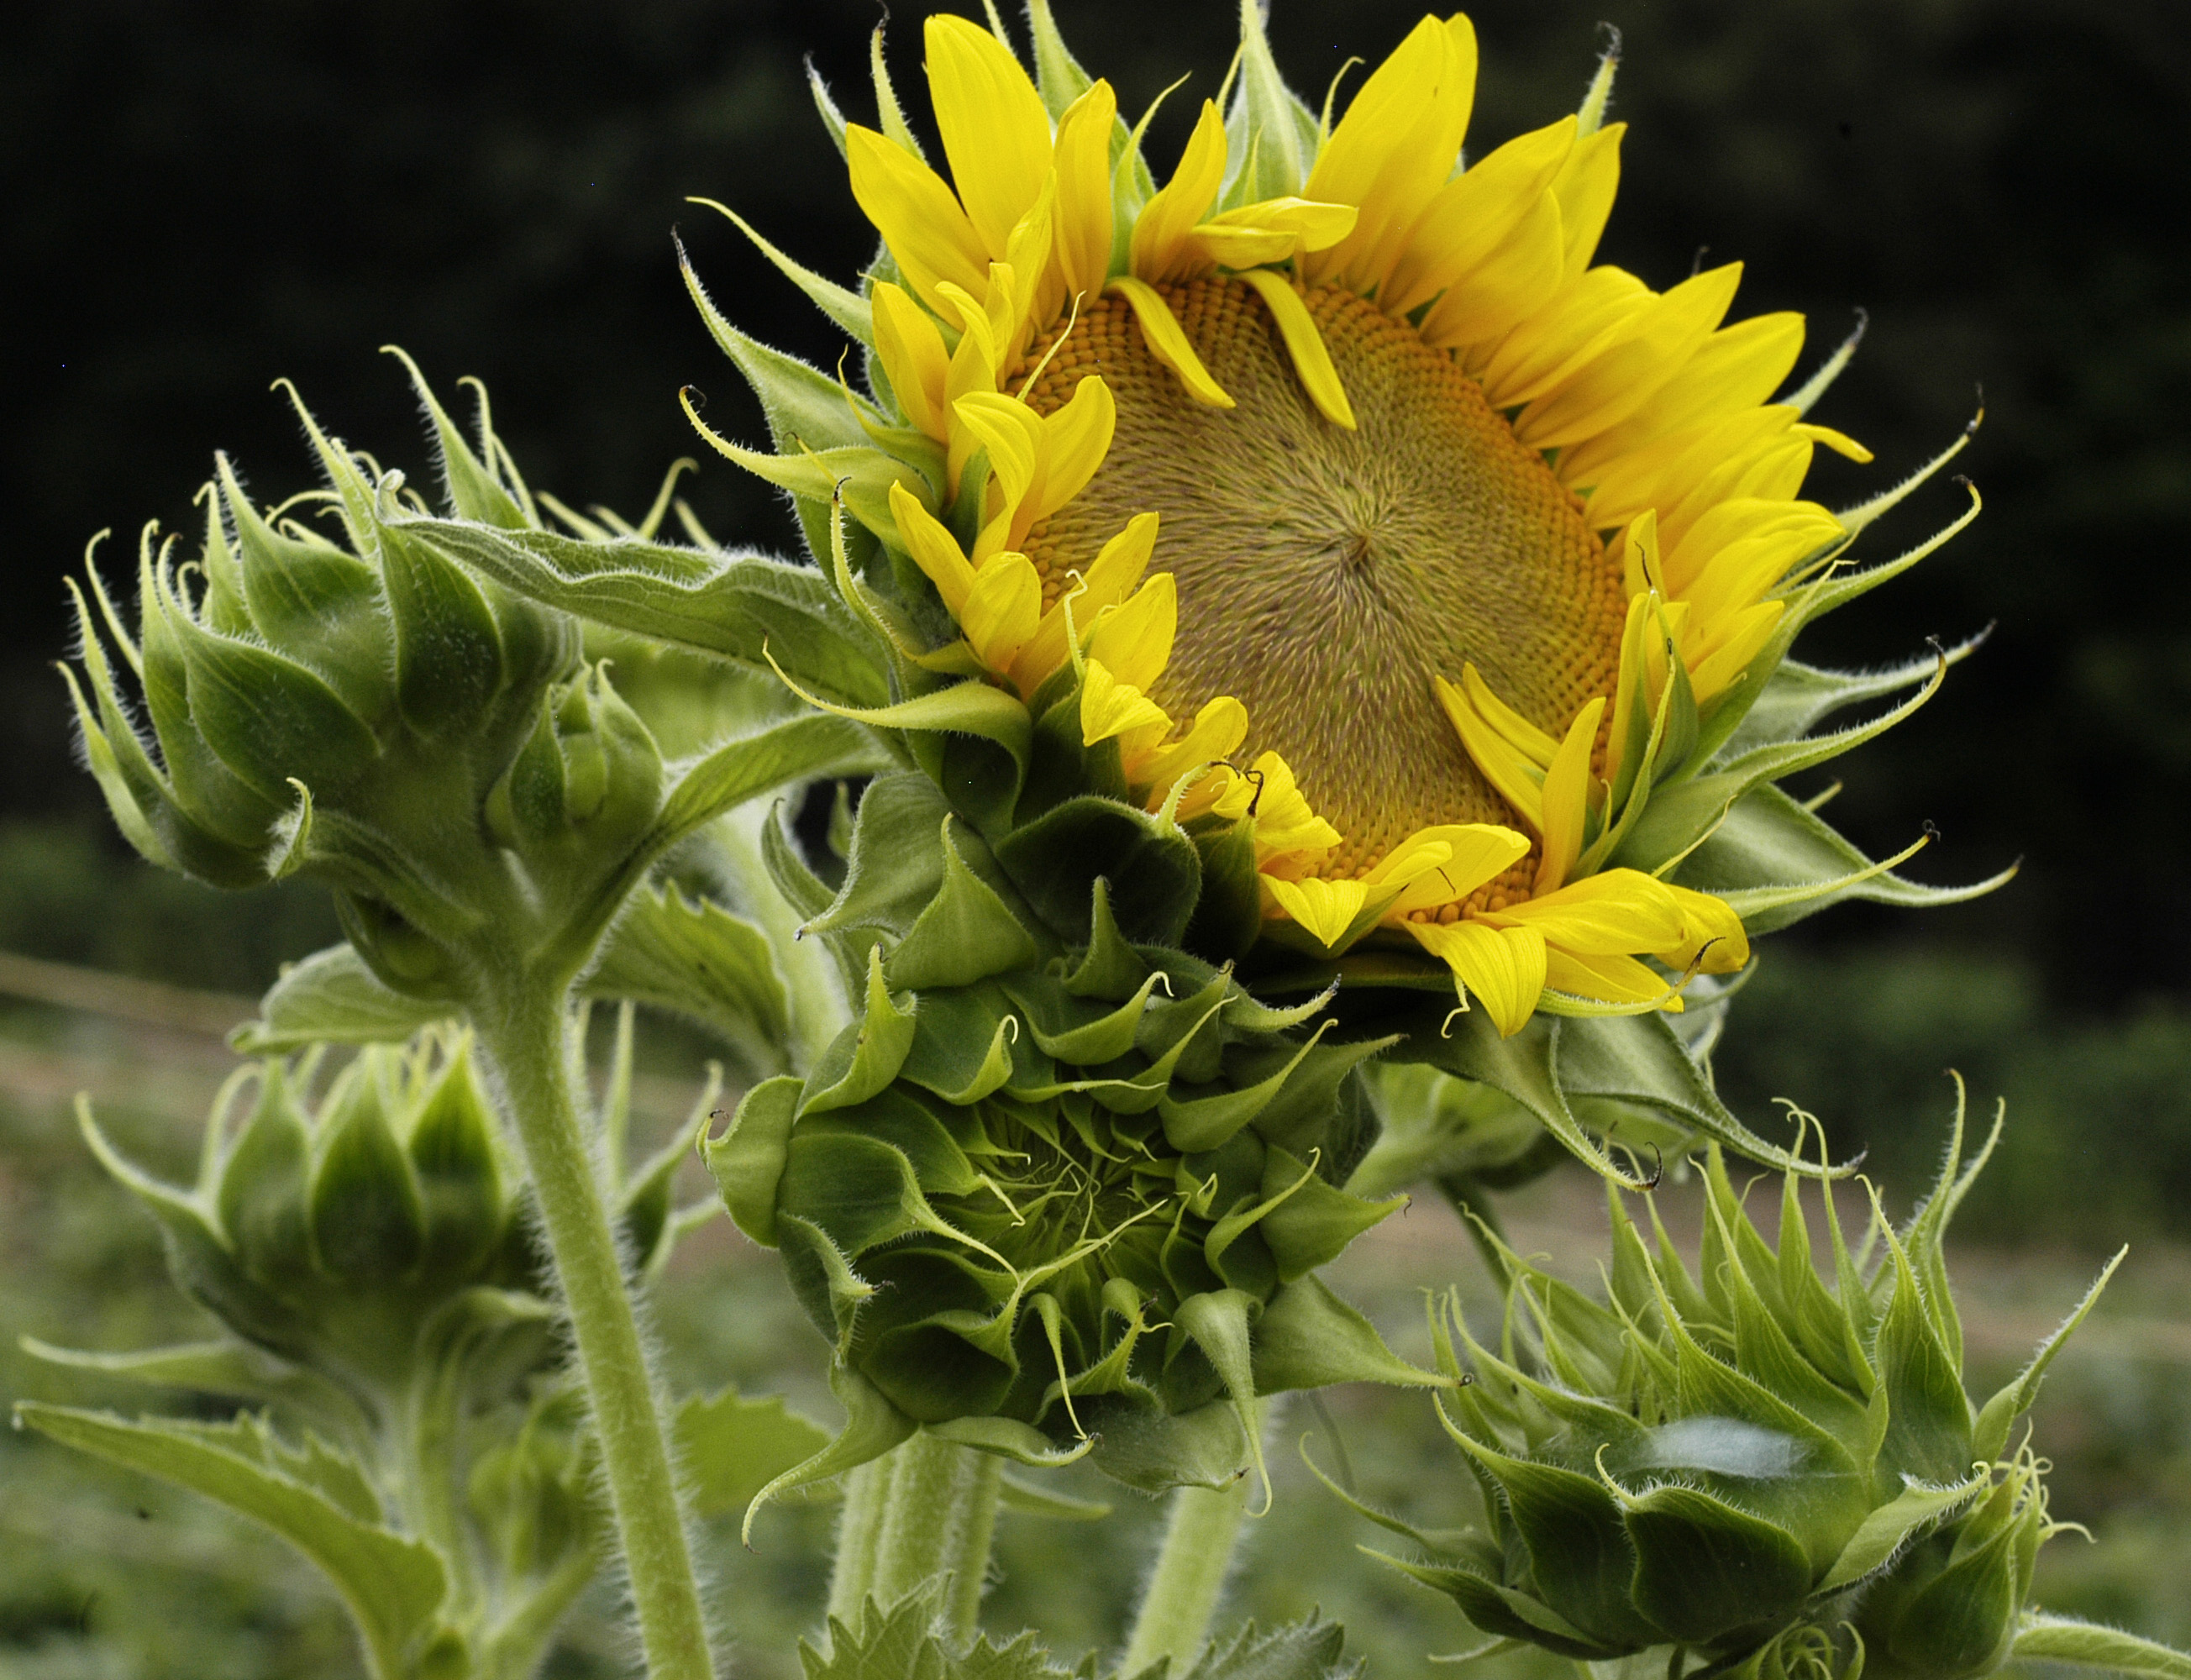 Peredovik (oil seed) Sunflower, 4 g Southern Exposure